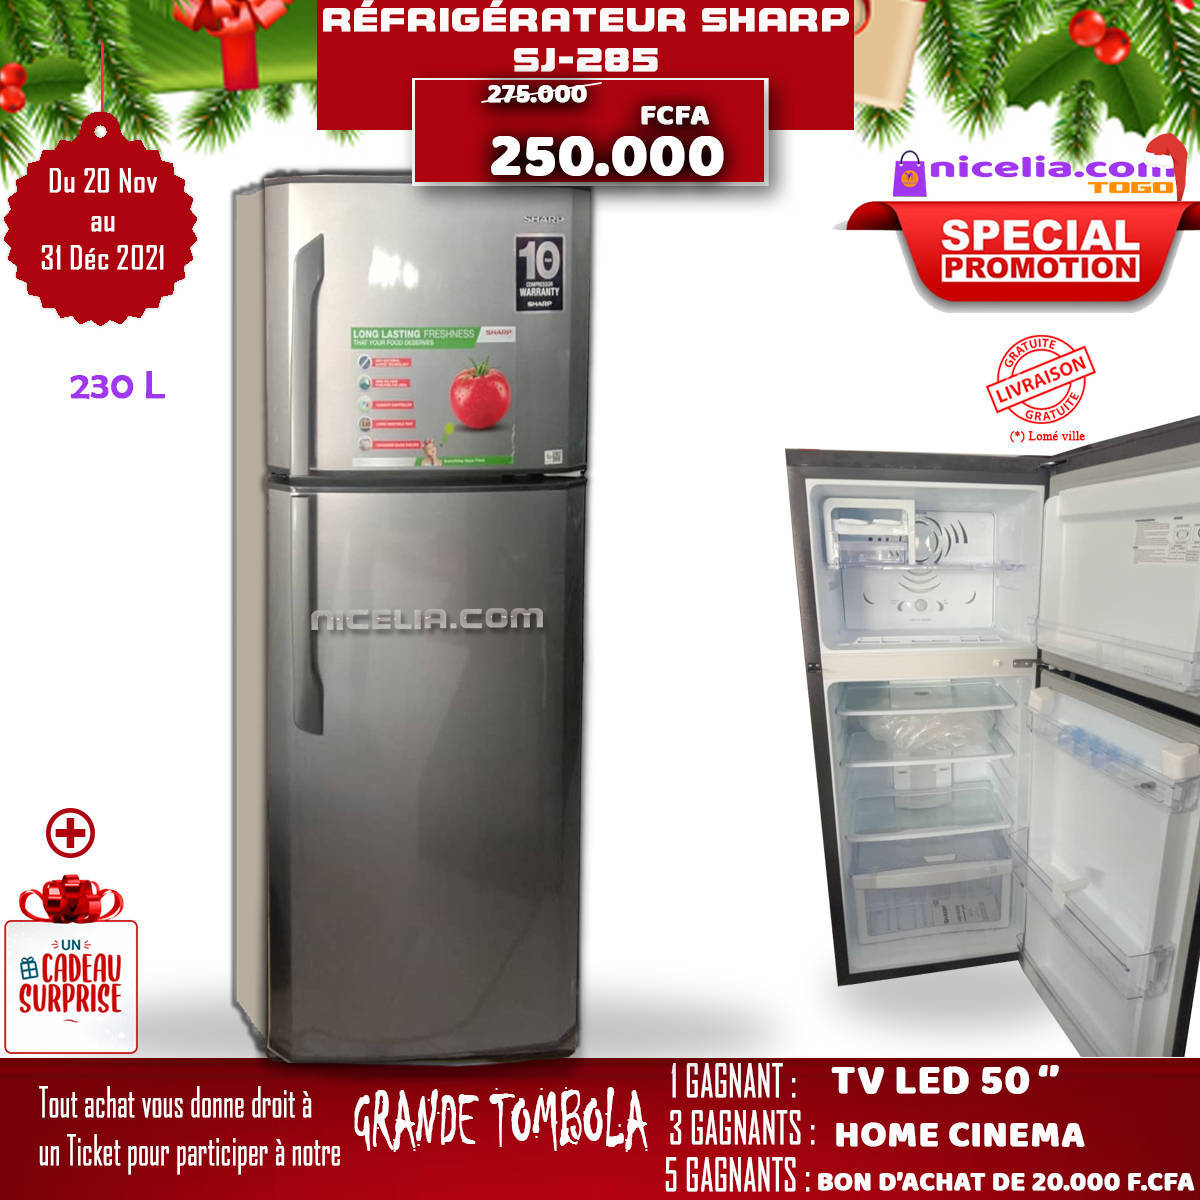 Réfrigérateur sharp sj 285